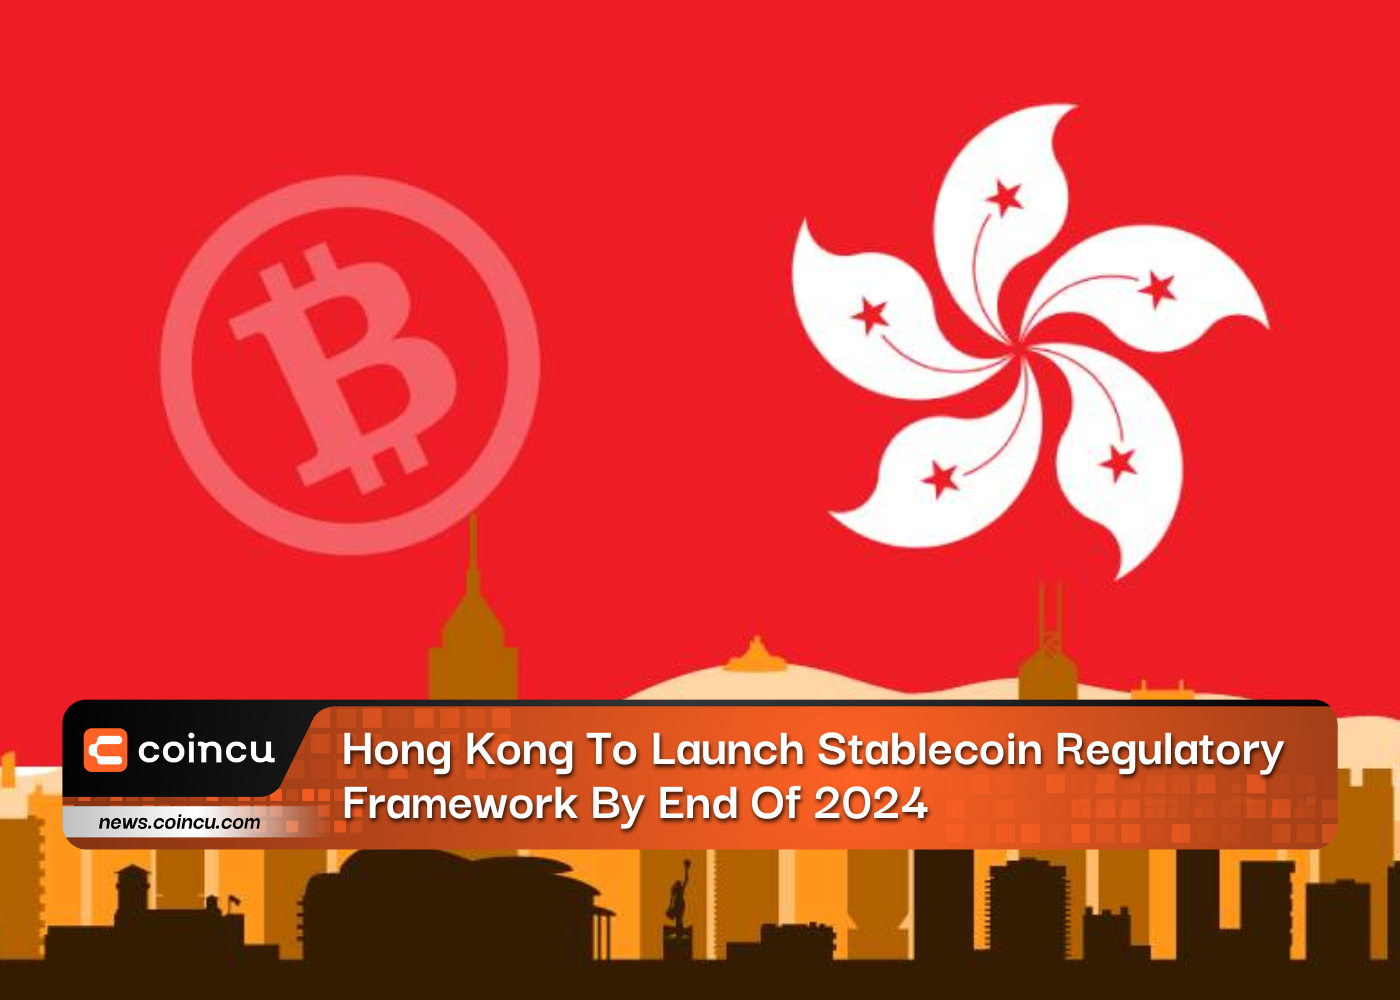 Hong Kong lancera un cadre réglementaire Stablecoin d'ici la fin de 2024